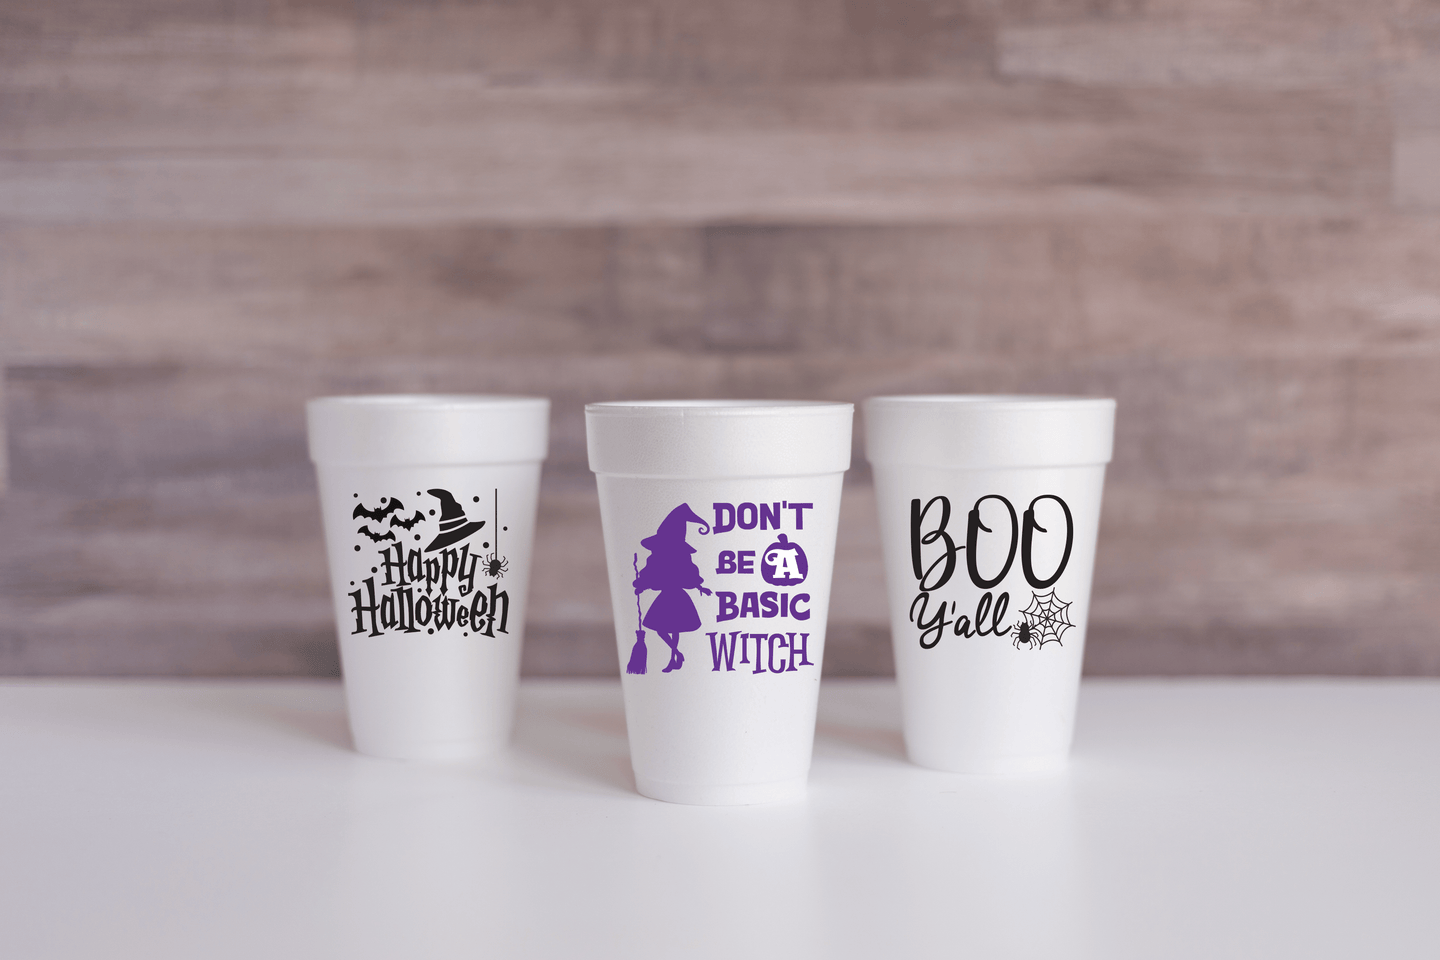 custom styrofoam cups - summer - lake design